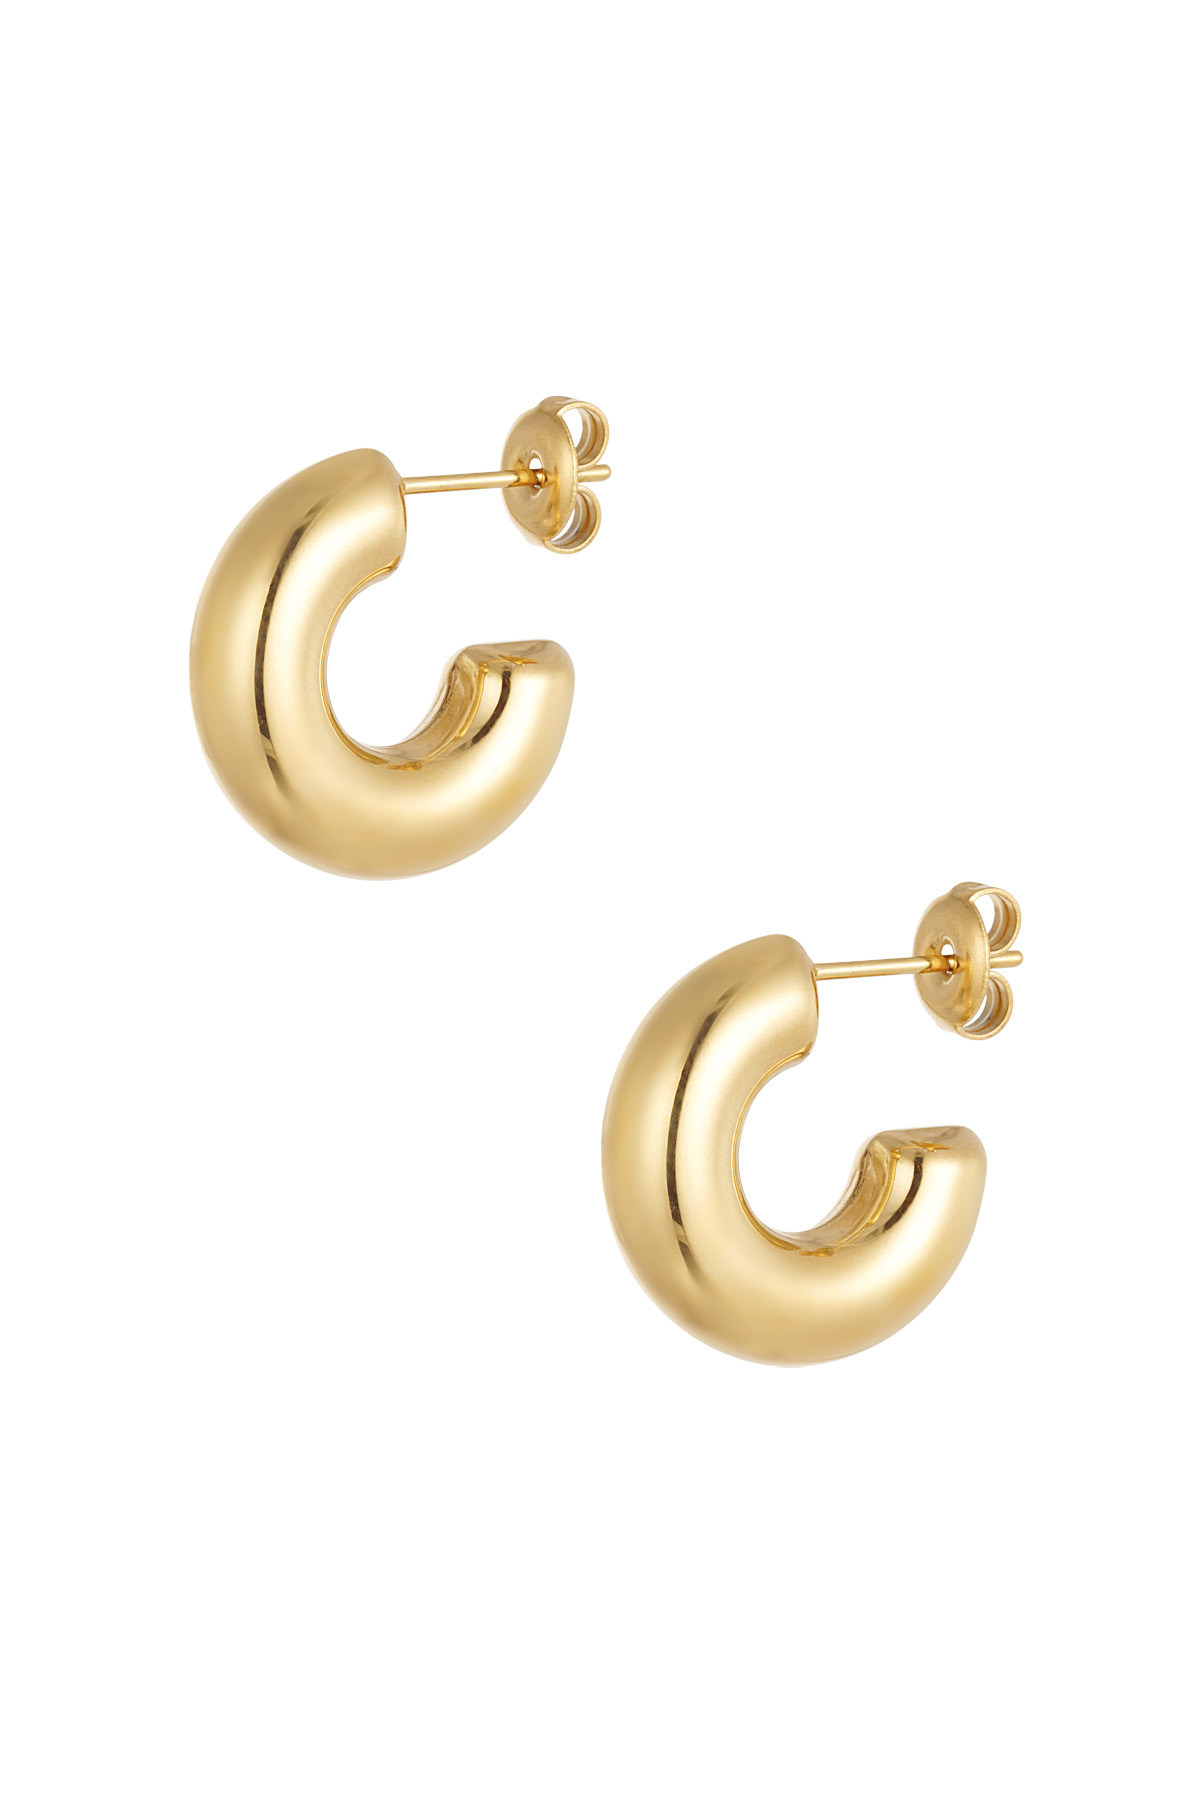 Earrings aesthetic basic half small moon - gold h5 